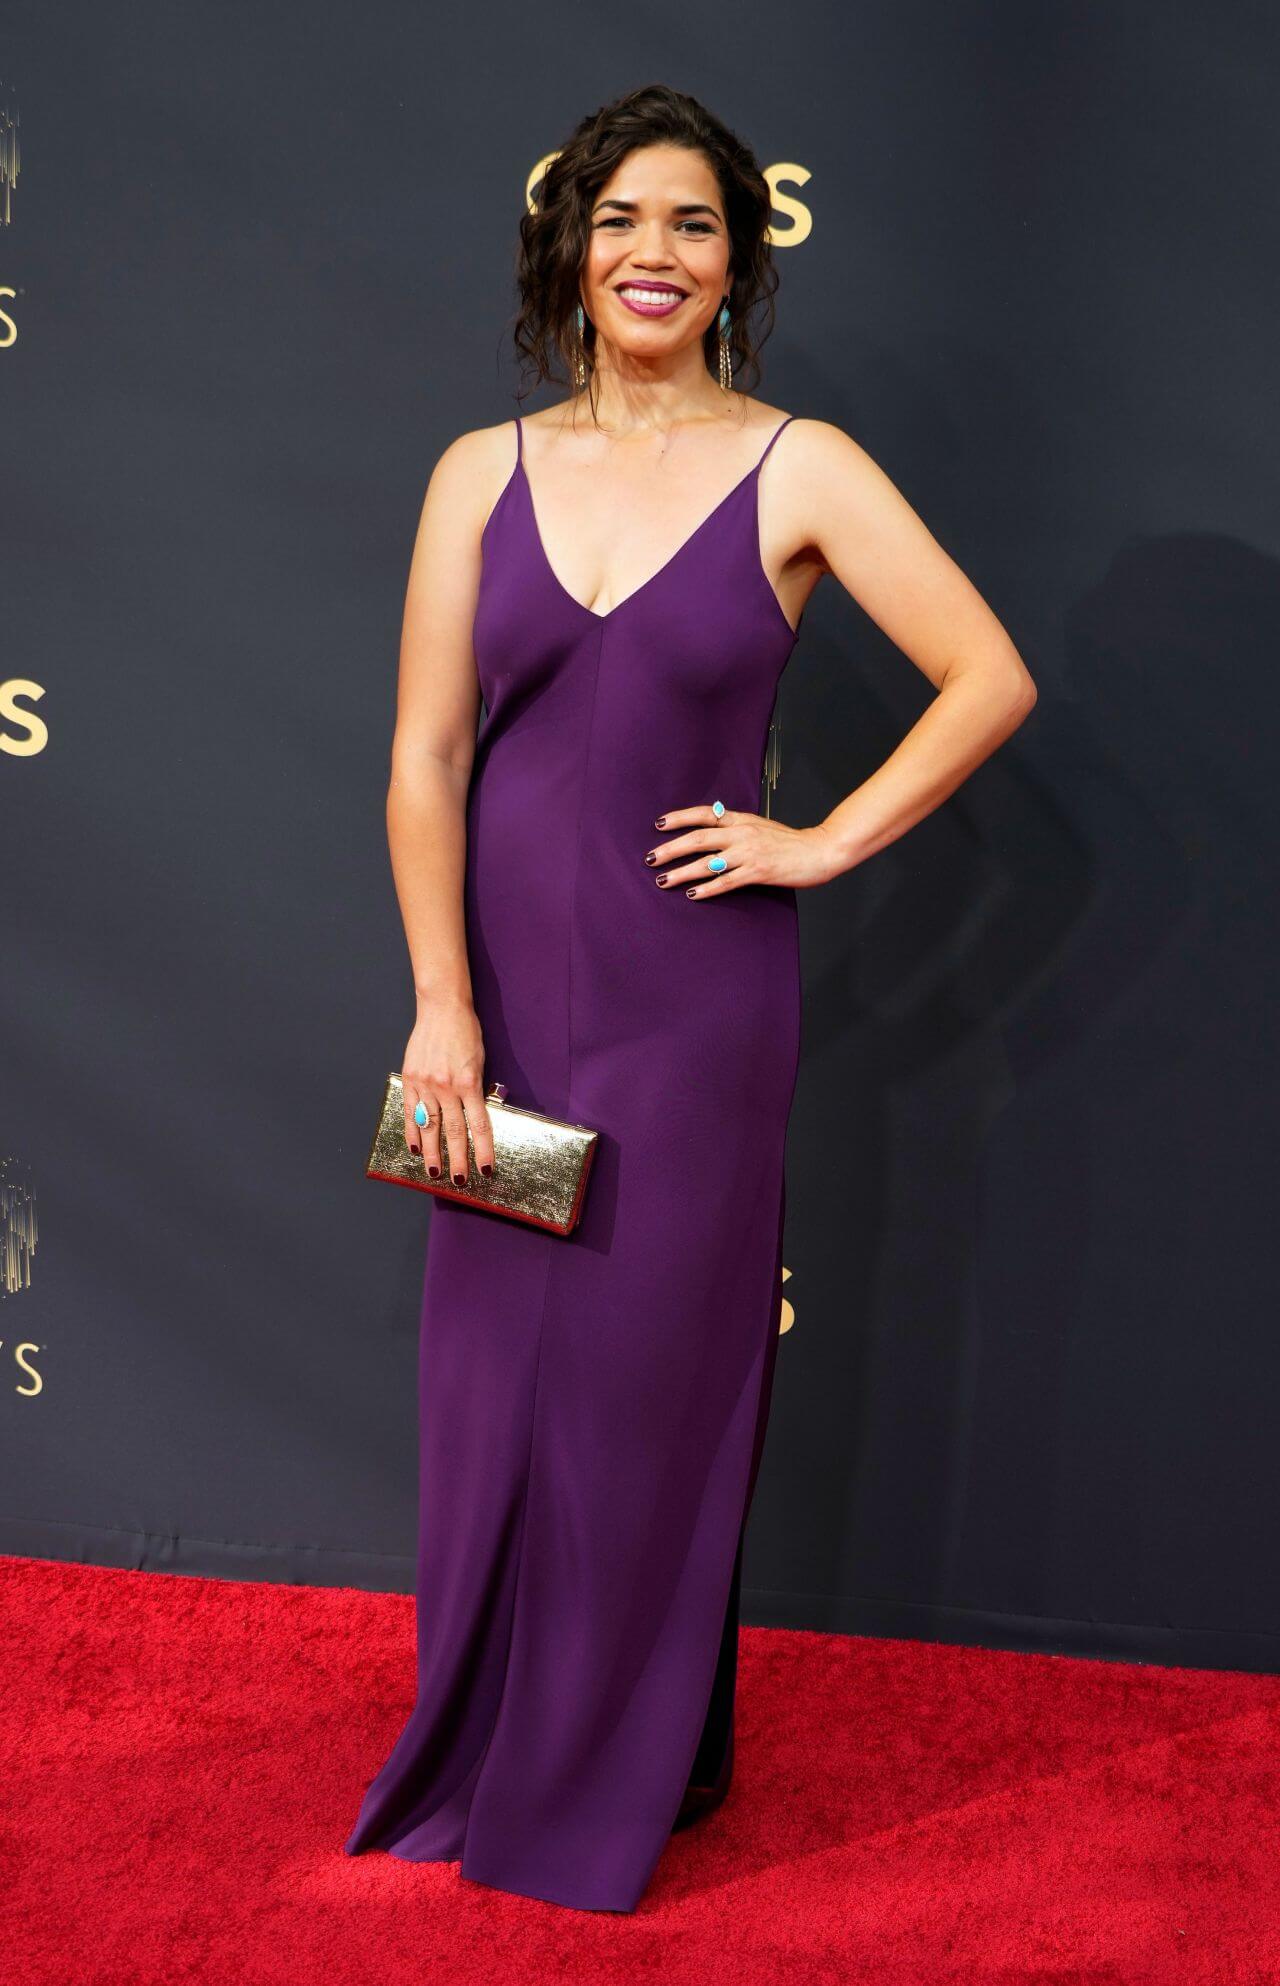 America Ferrera In Purple Strap SleeveLong Dress At Emmy Awards